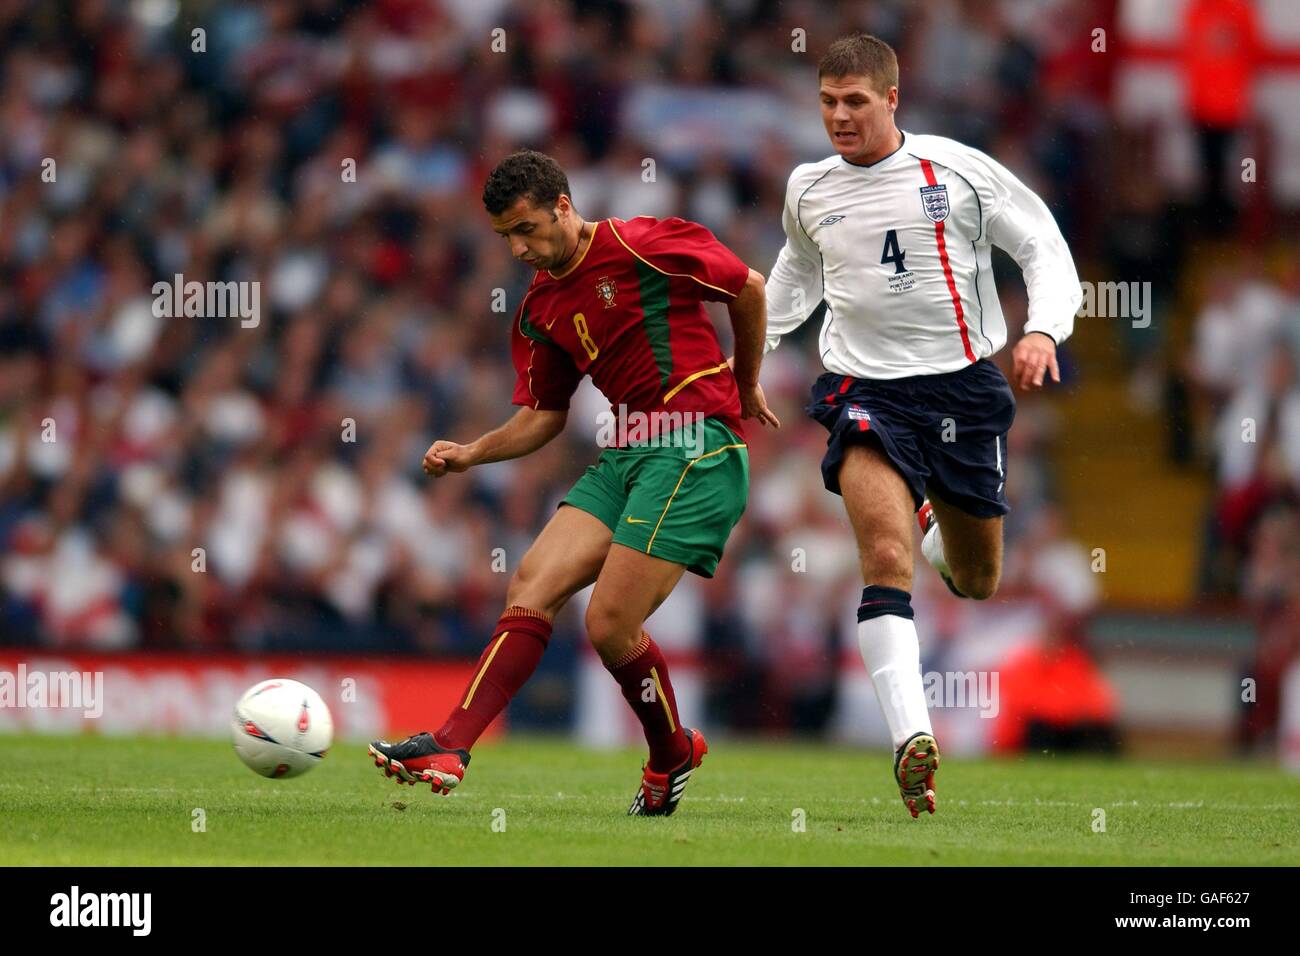 Soccer - International Friendly - England v Portugal. England's Steven Gerrard watches over Portugal's Simao Sabrosa Stock Photo